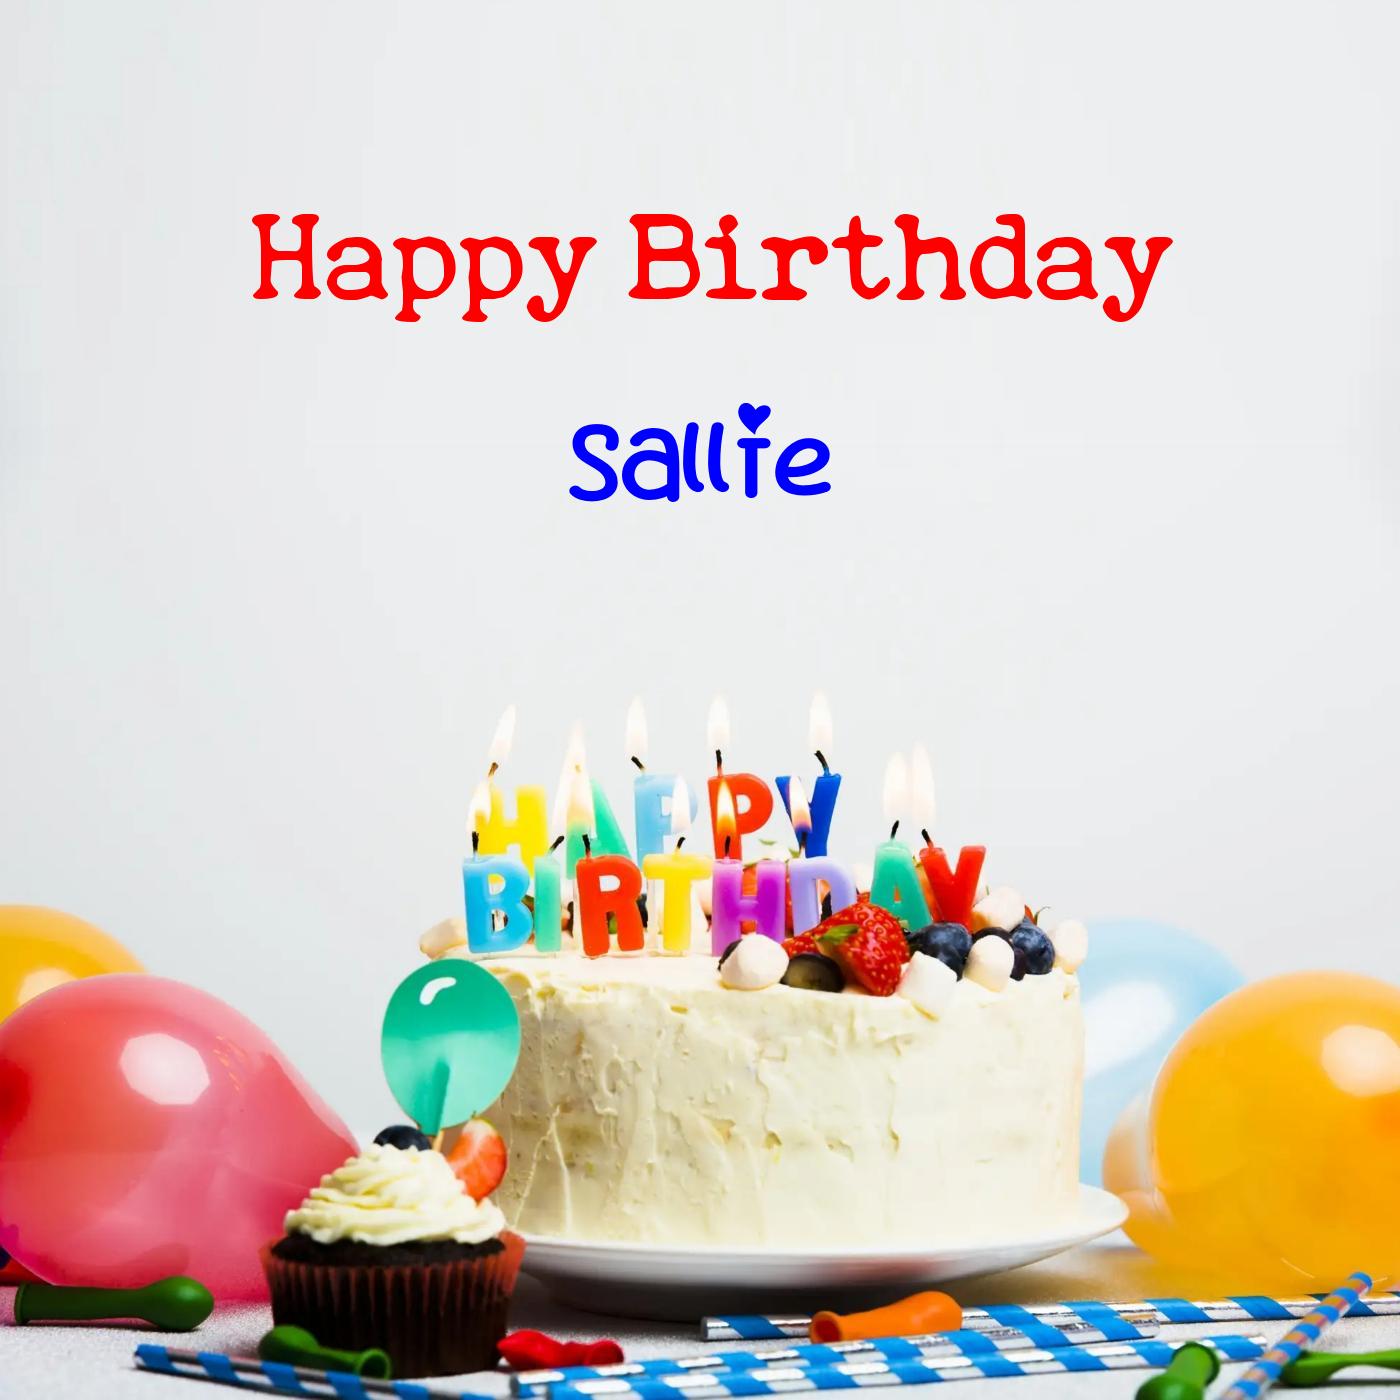 Happy Birthday Sallie Cake Balloons Card